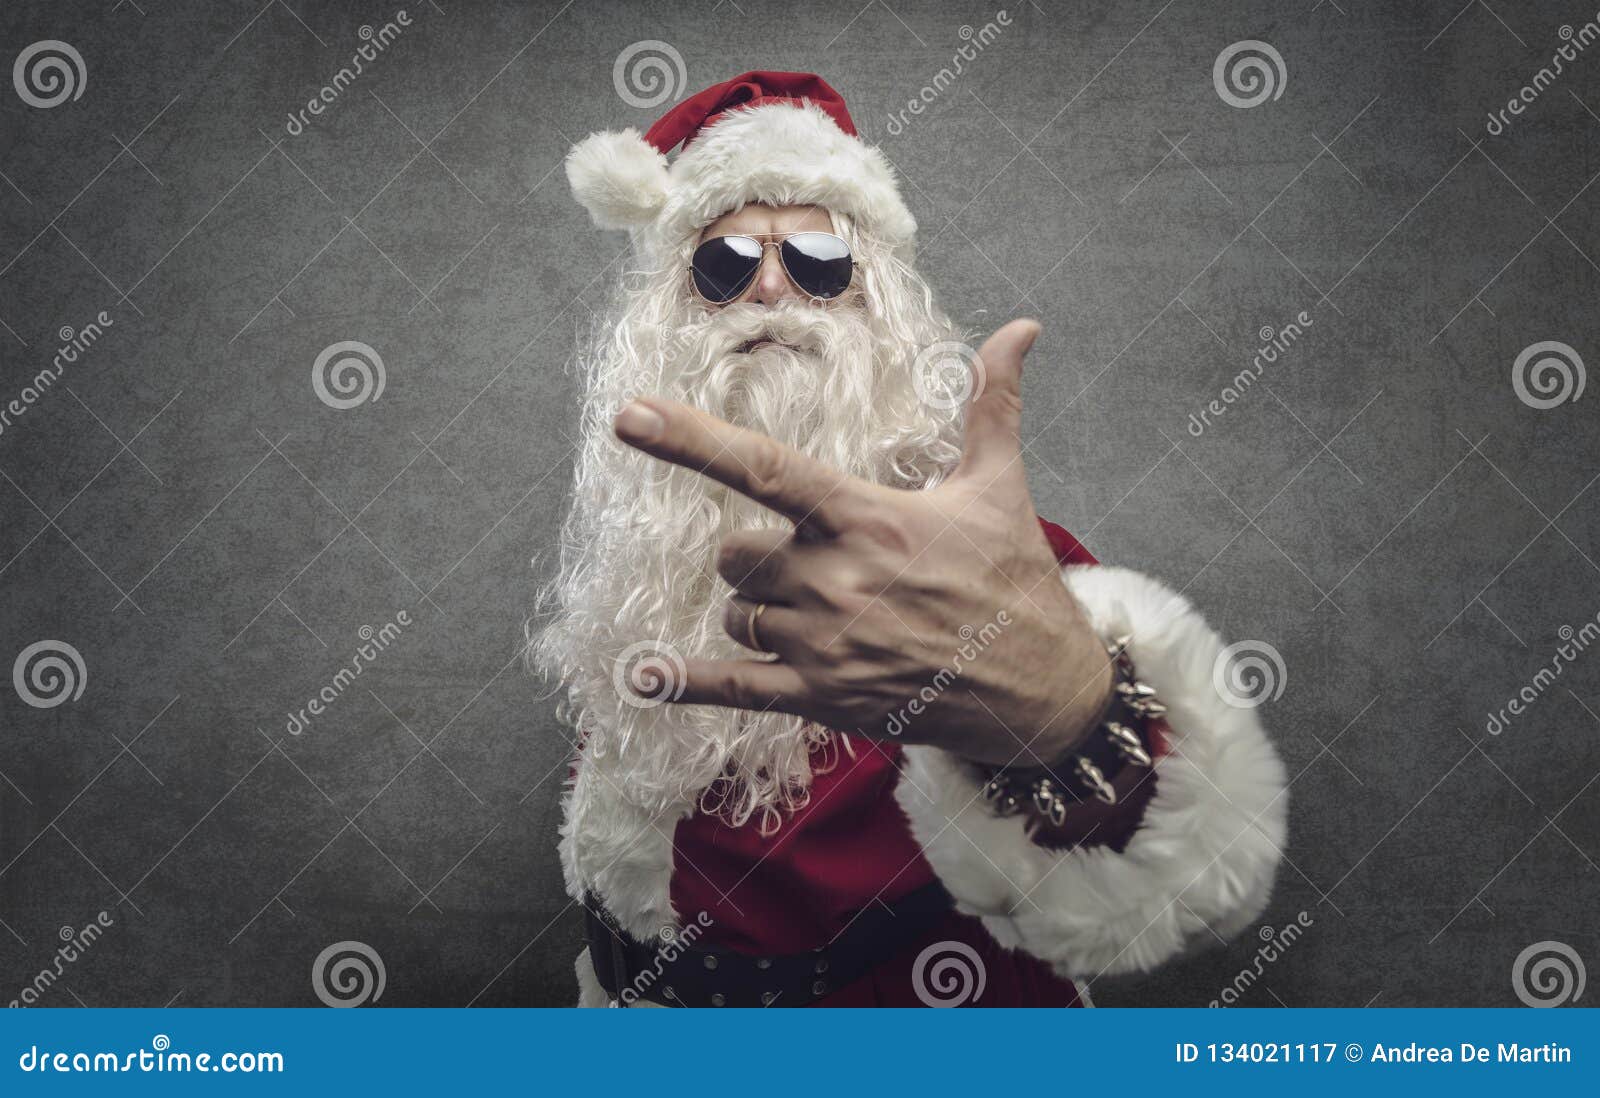 Cool Rock Santa Claus Stock Image Image Of Funny Punk